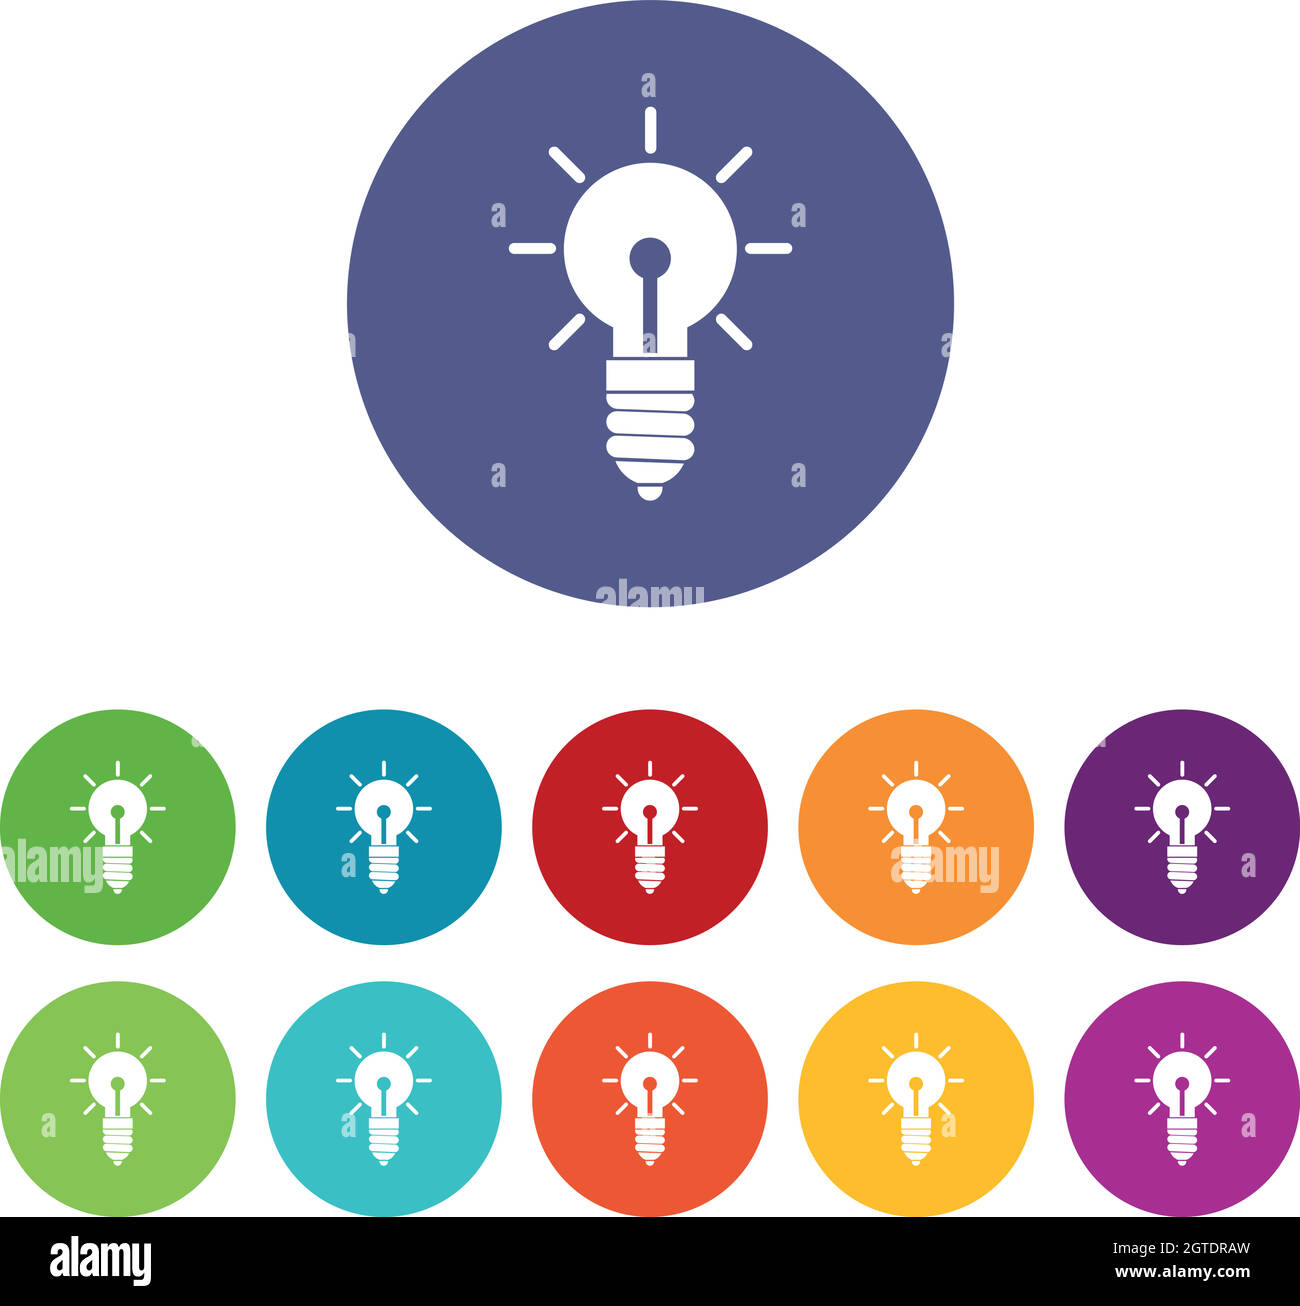 Ideenset-Symbole für Glühbirnen Stock Vektor